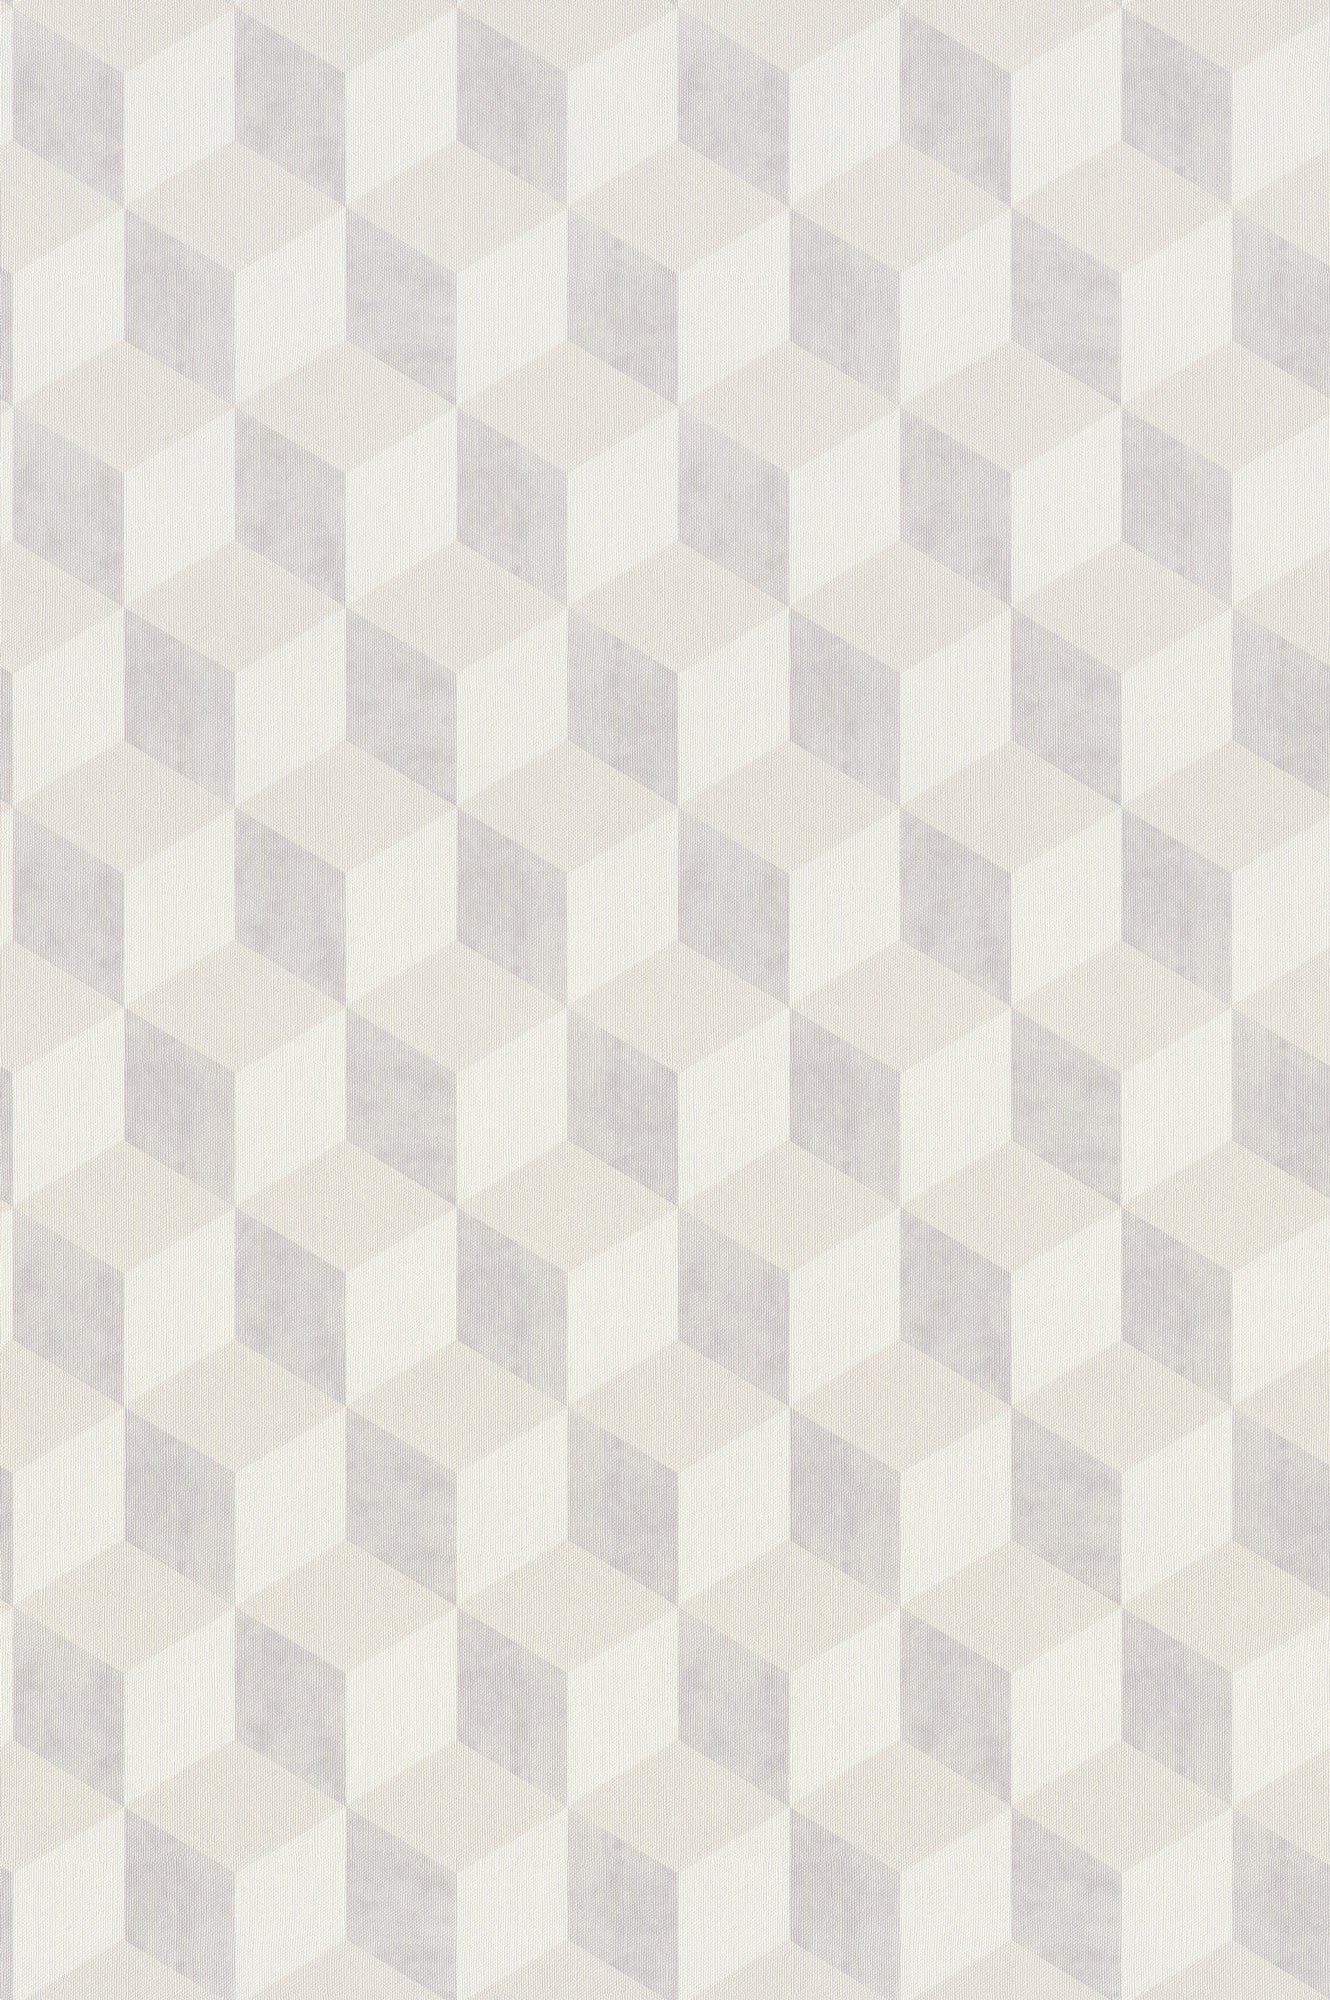 Cube - Grey & White